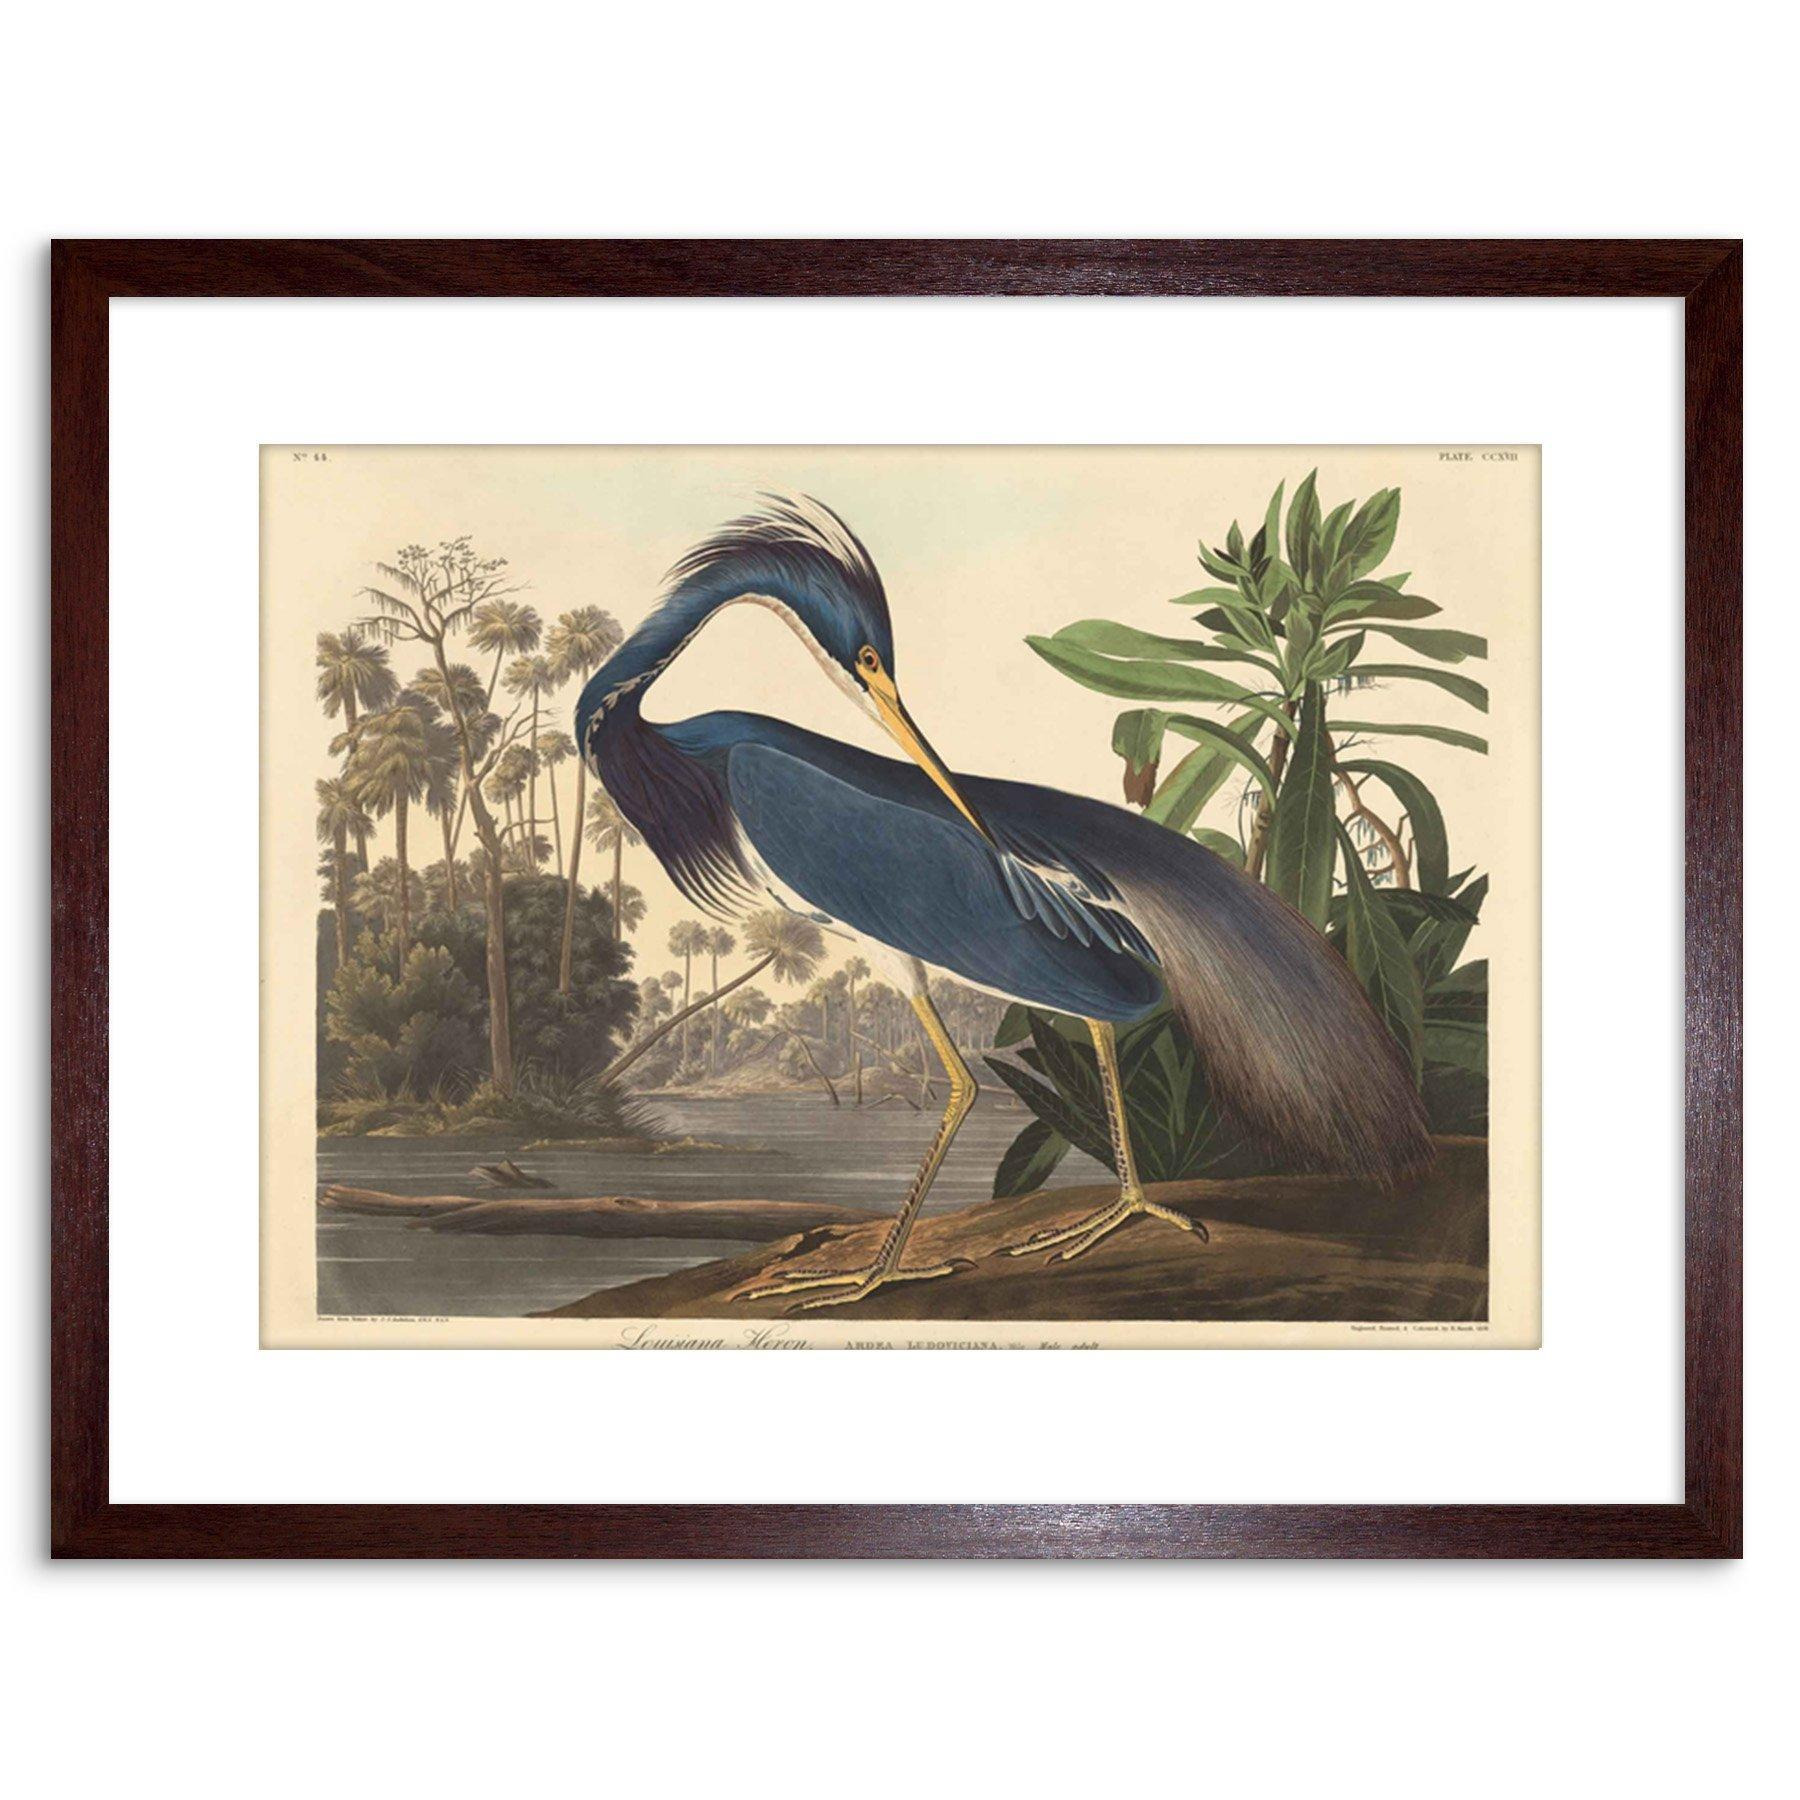 Wall Art Print Painting Bird Audubon Louisiana Heron Artwork Framed 9X7 Inch - image 1